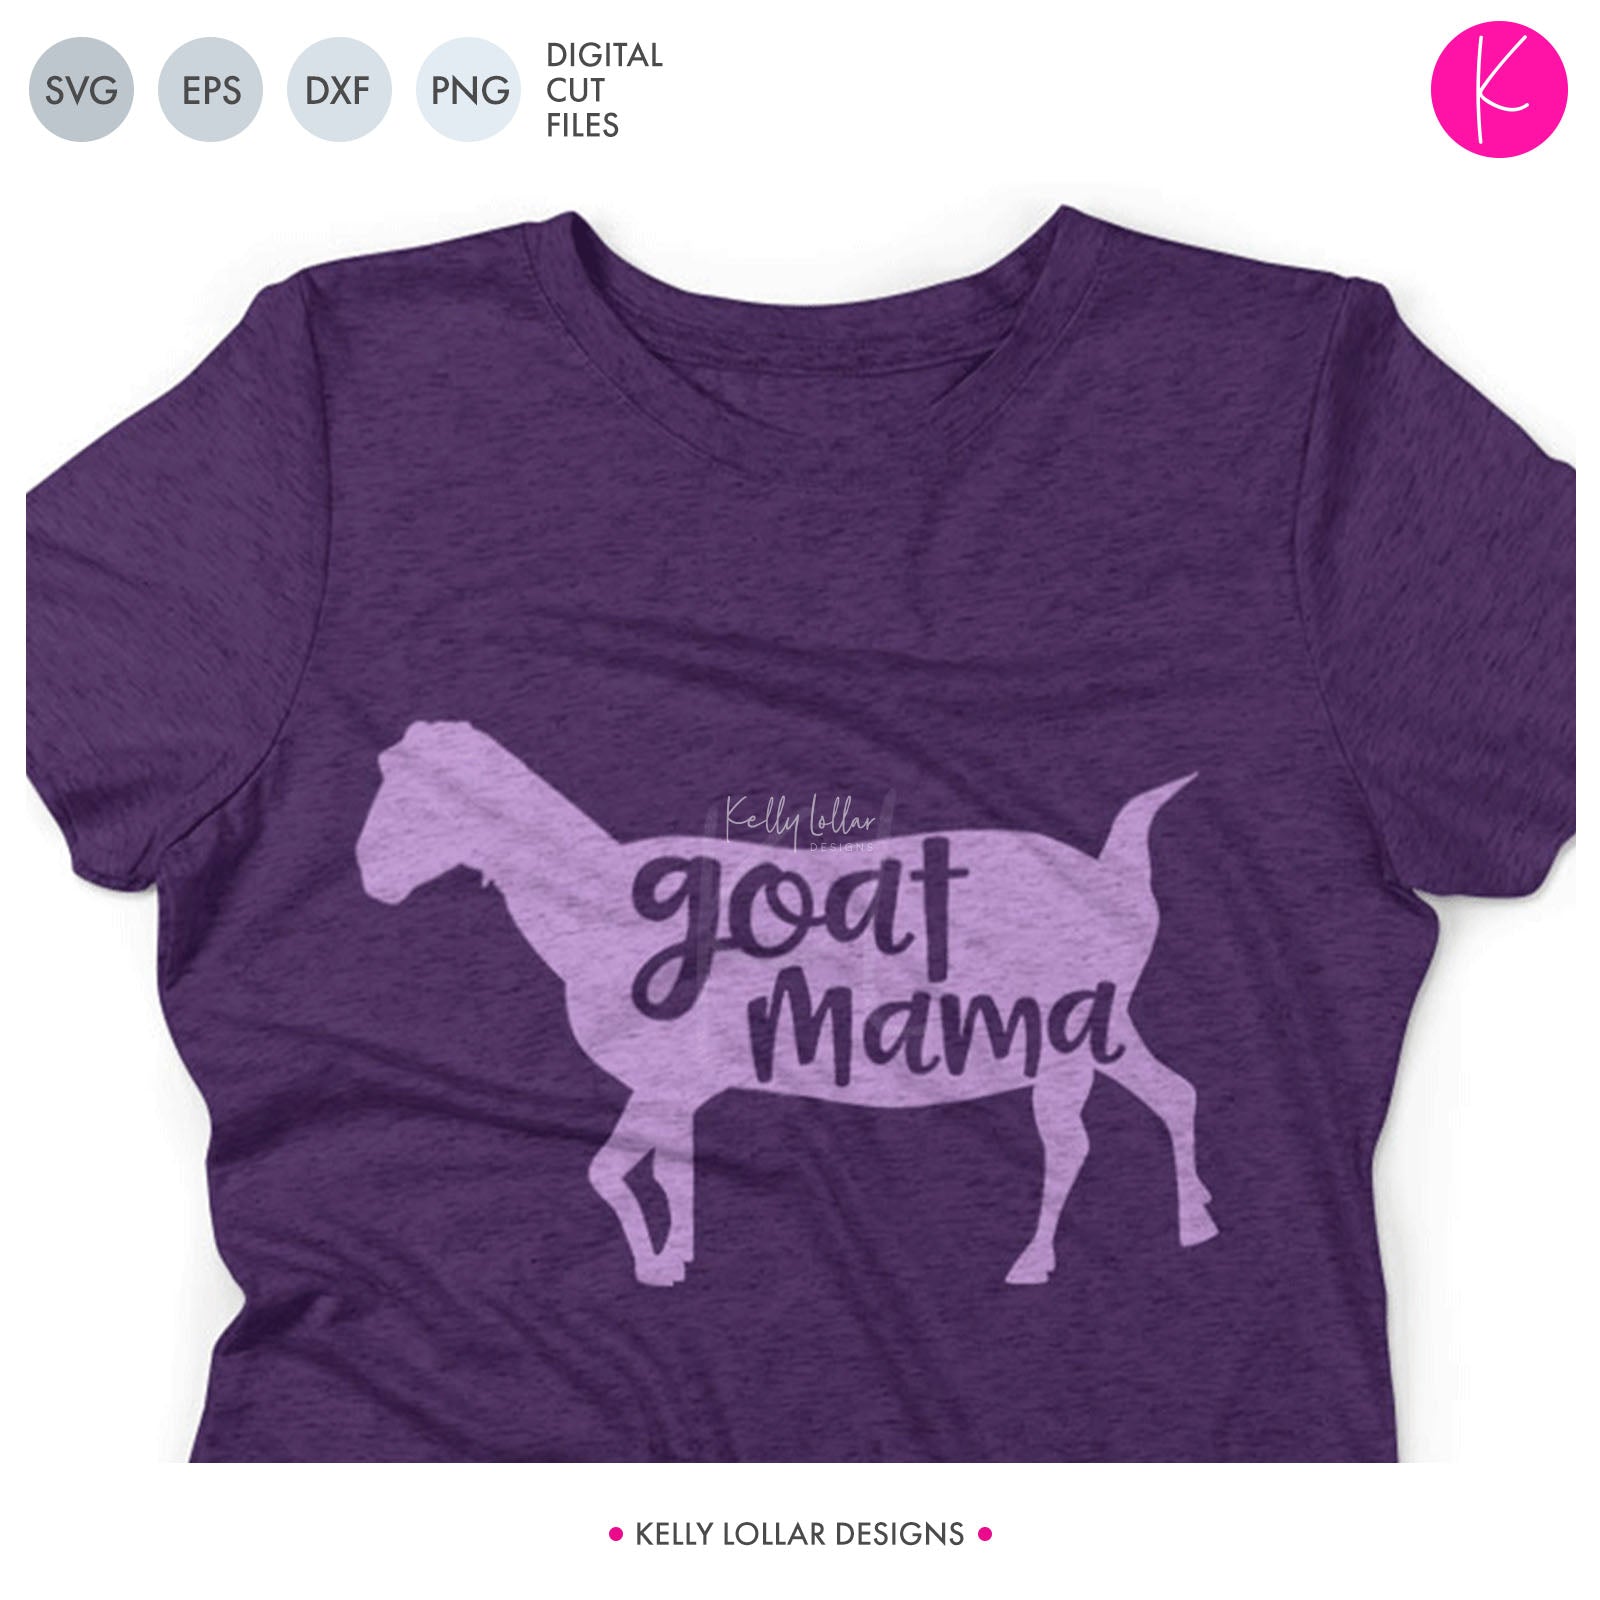 Download Goat Mama SVG File | Kelly Lollar Designs